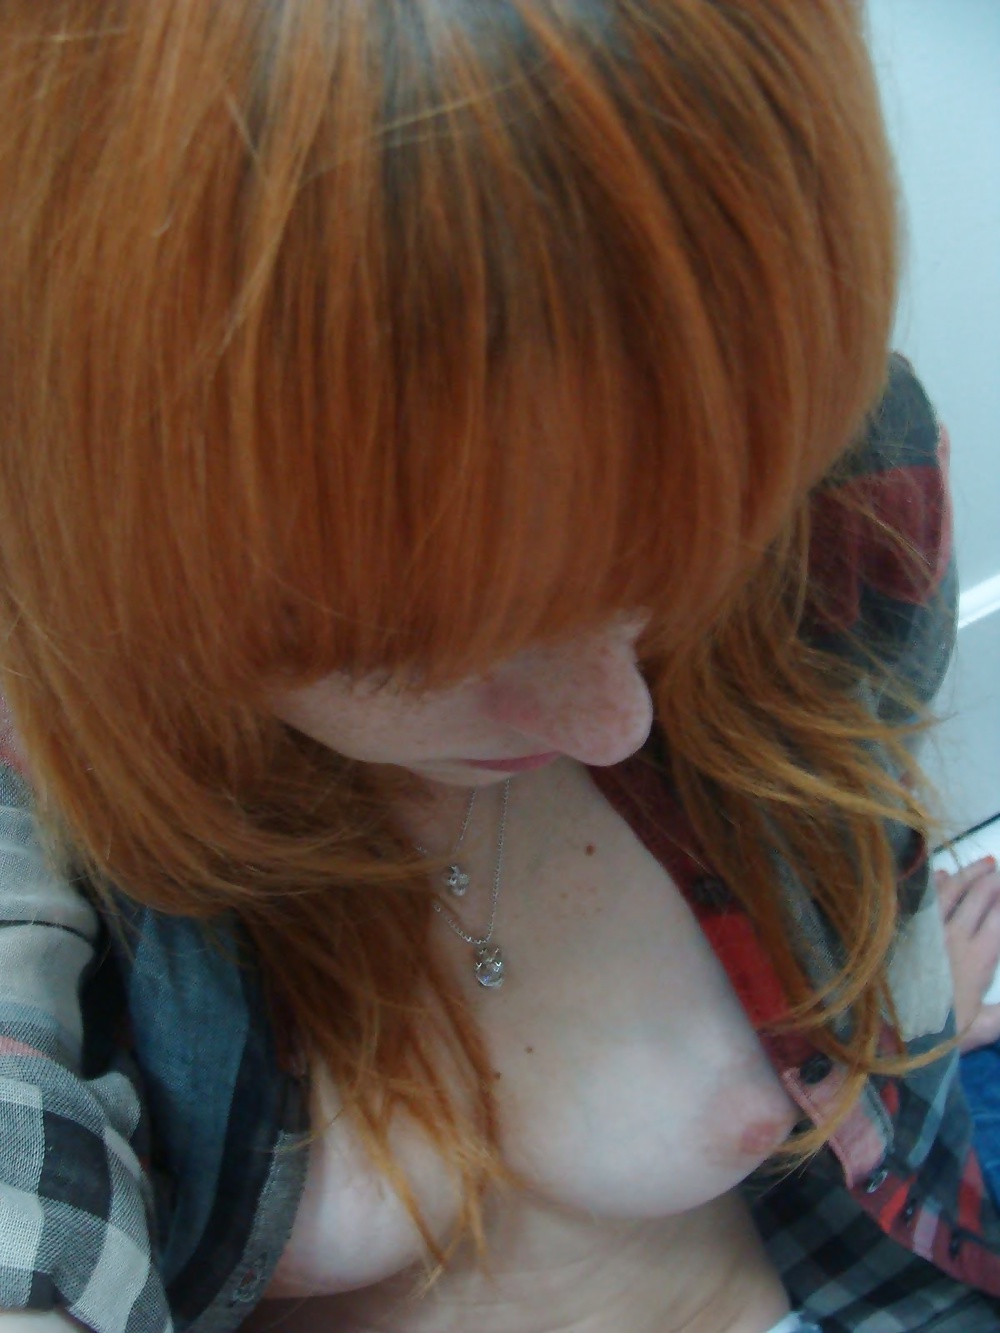 Porn image Selfie Girl #3 : Redhead Big Boobs